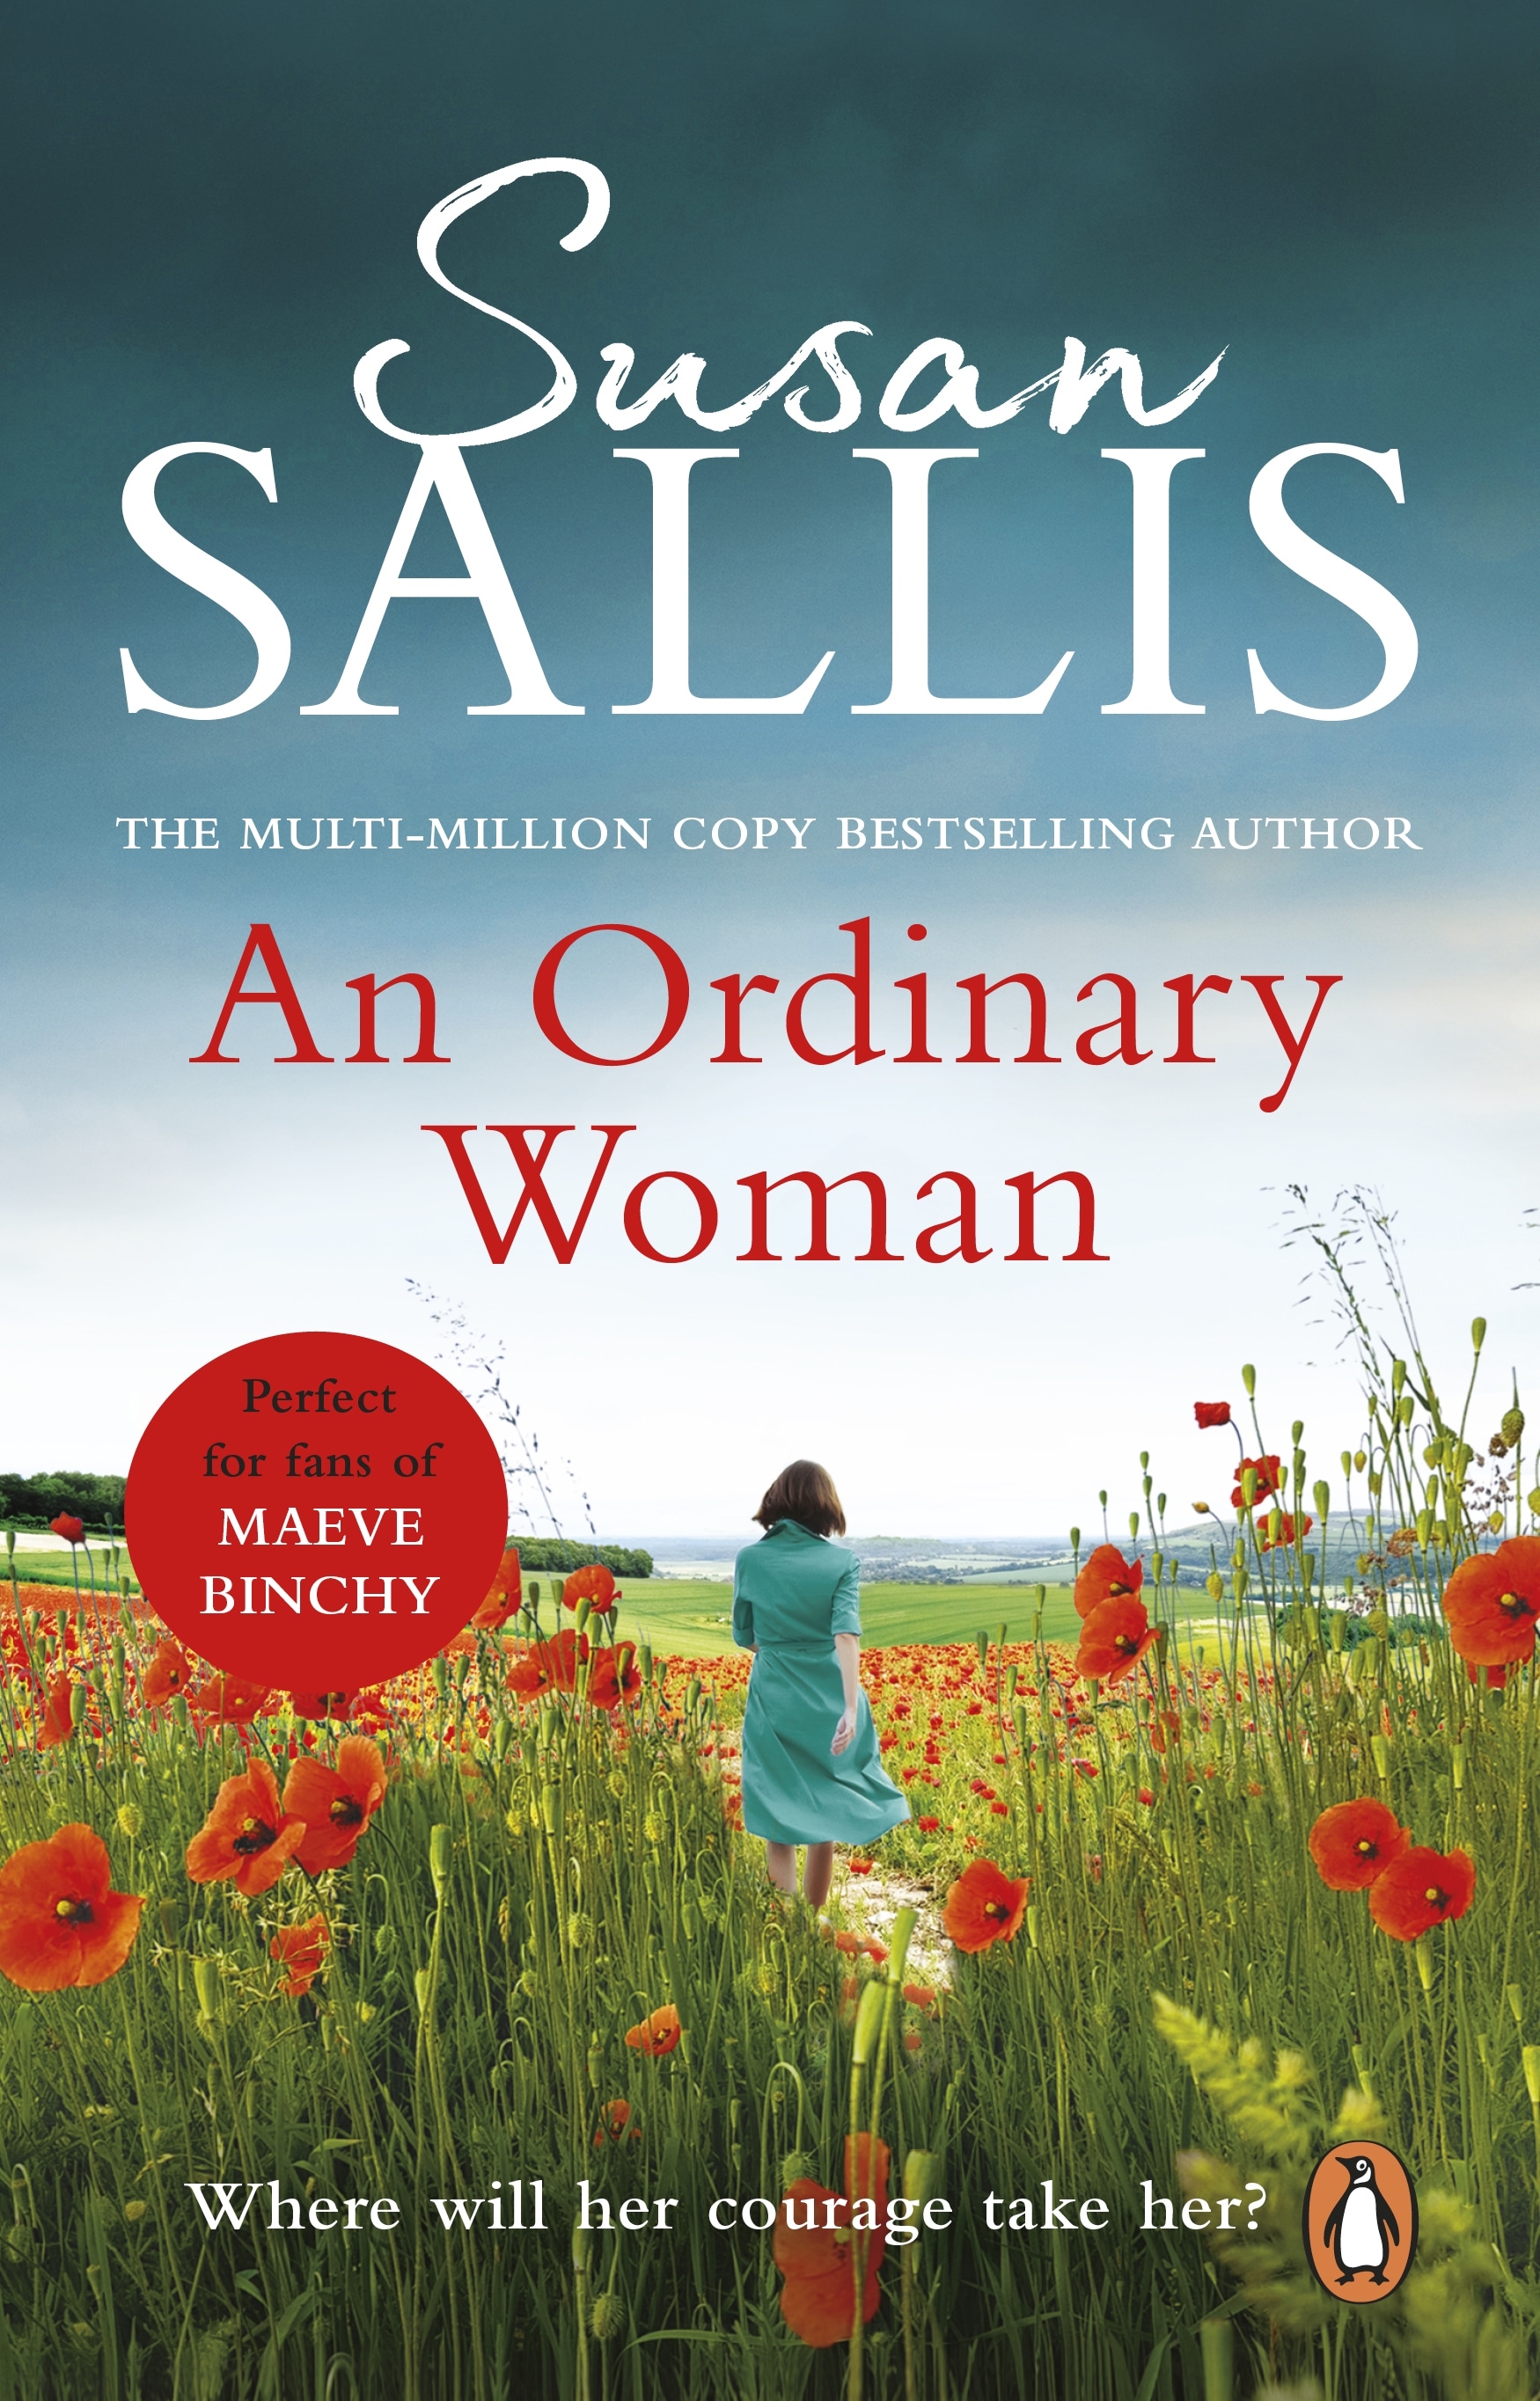 Book “An Ordinary Woman” by Susan Sallis — July 22, 2021